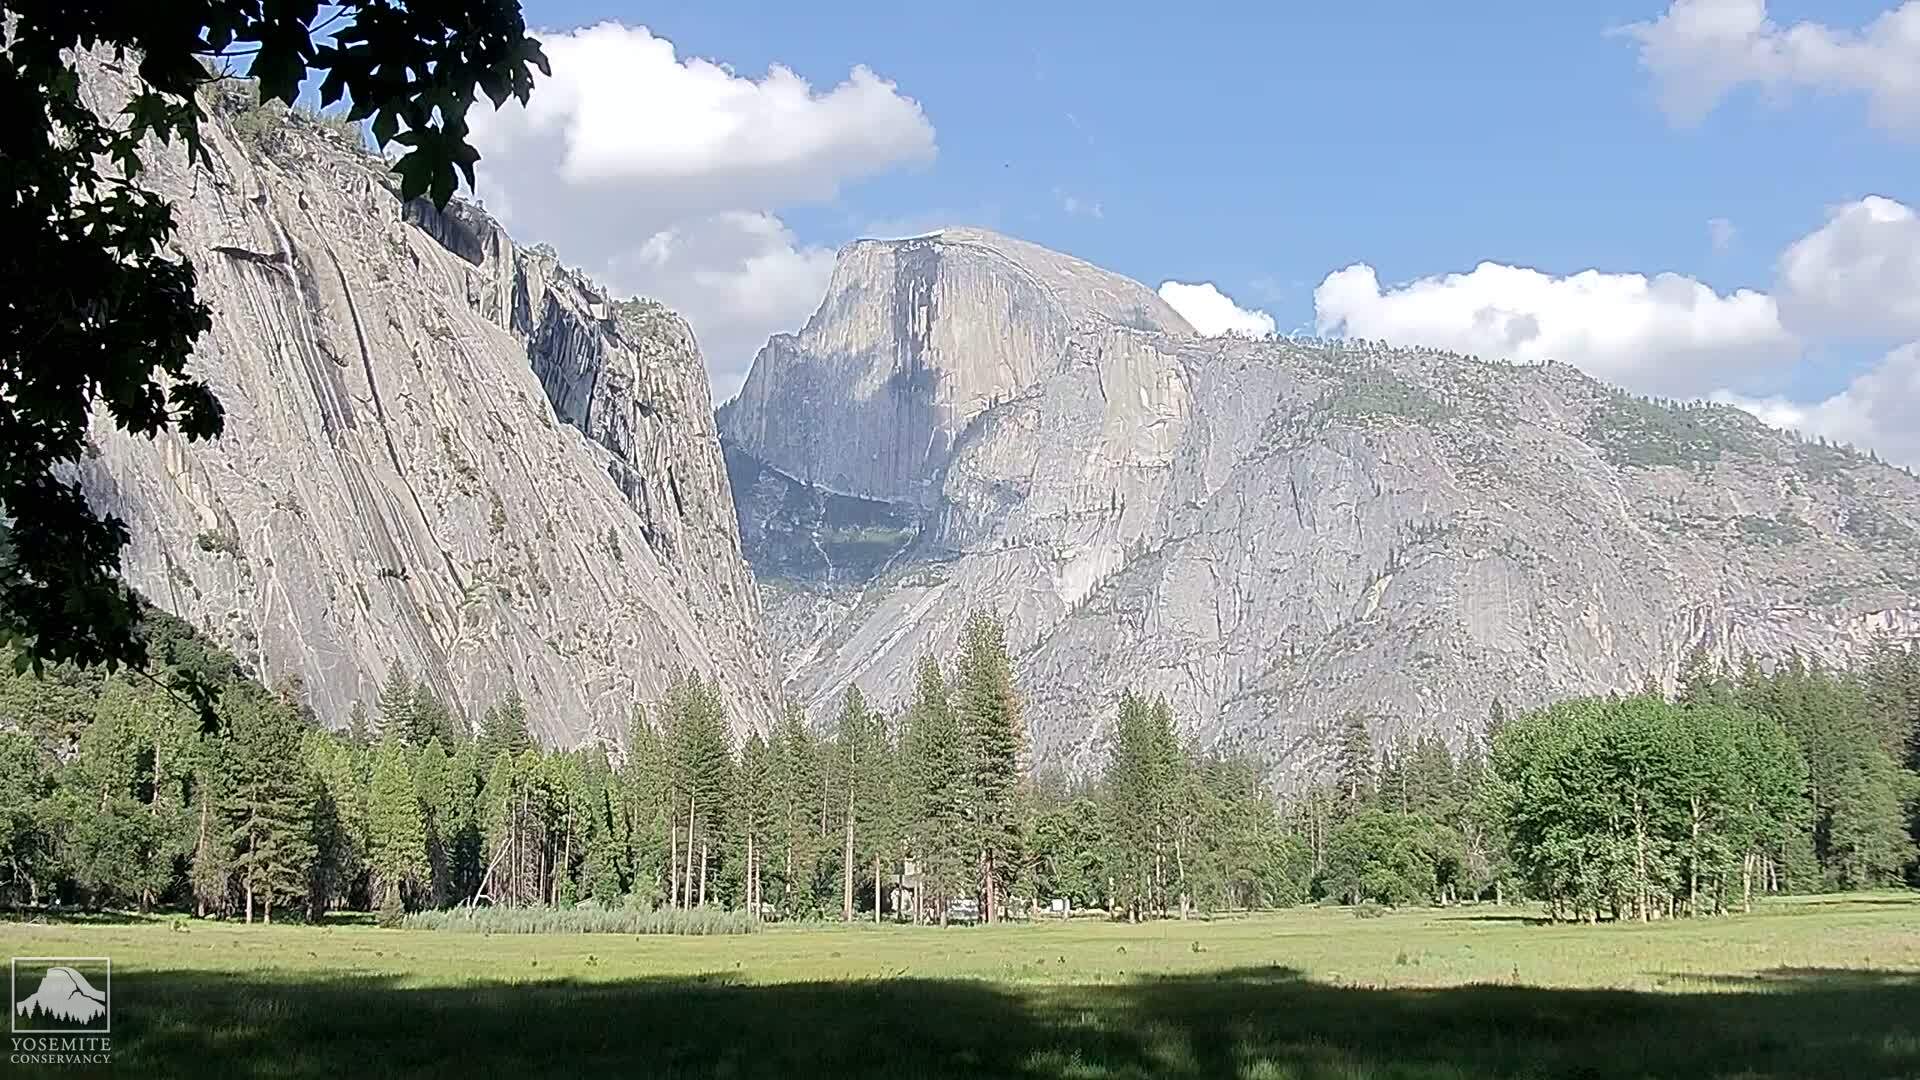 Yosemite National Park, Californie Me. 17:45